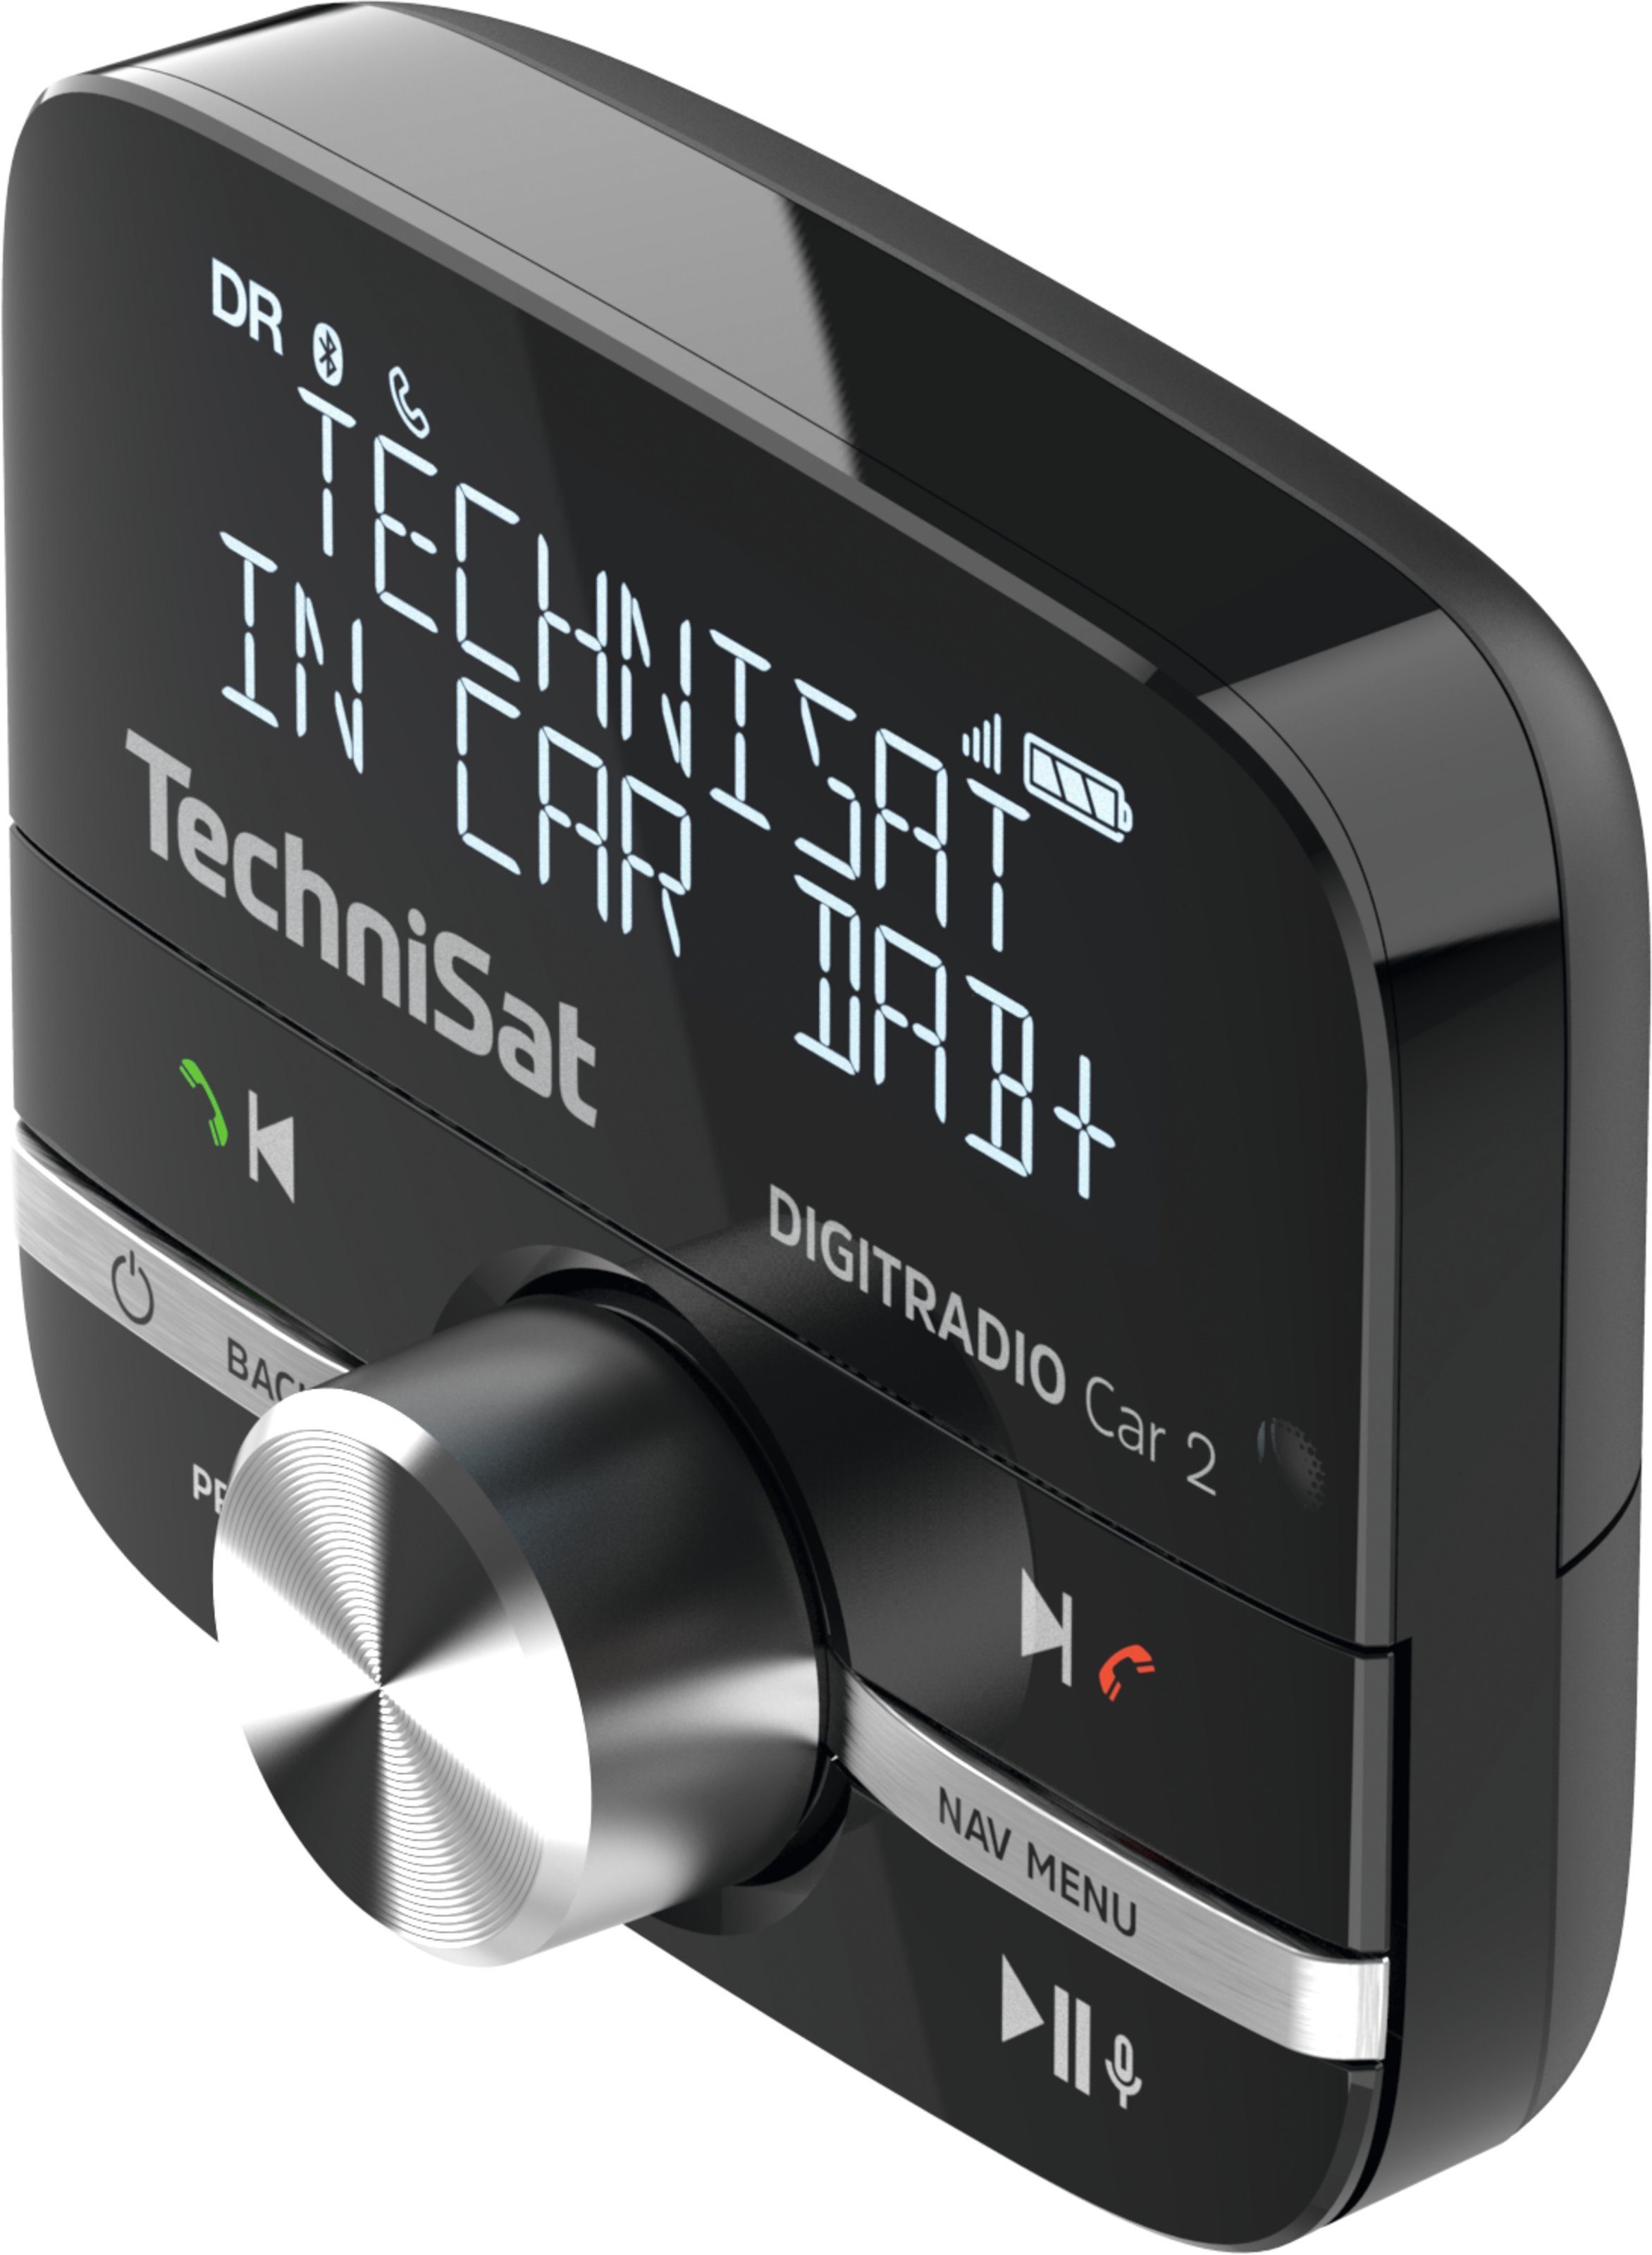 TechniSat DIGITRADIO Car 2 Digitalradio (DAB) (Digitalradio (DAB), UKW mit  RDS, FM-Tuner, Autoradio-Adapter für DAB+ Empfang, Bluetooth  Audio-Streaming, Freisprech-Funktion)